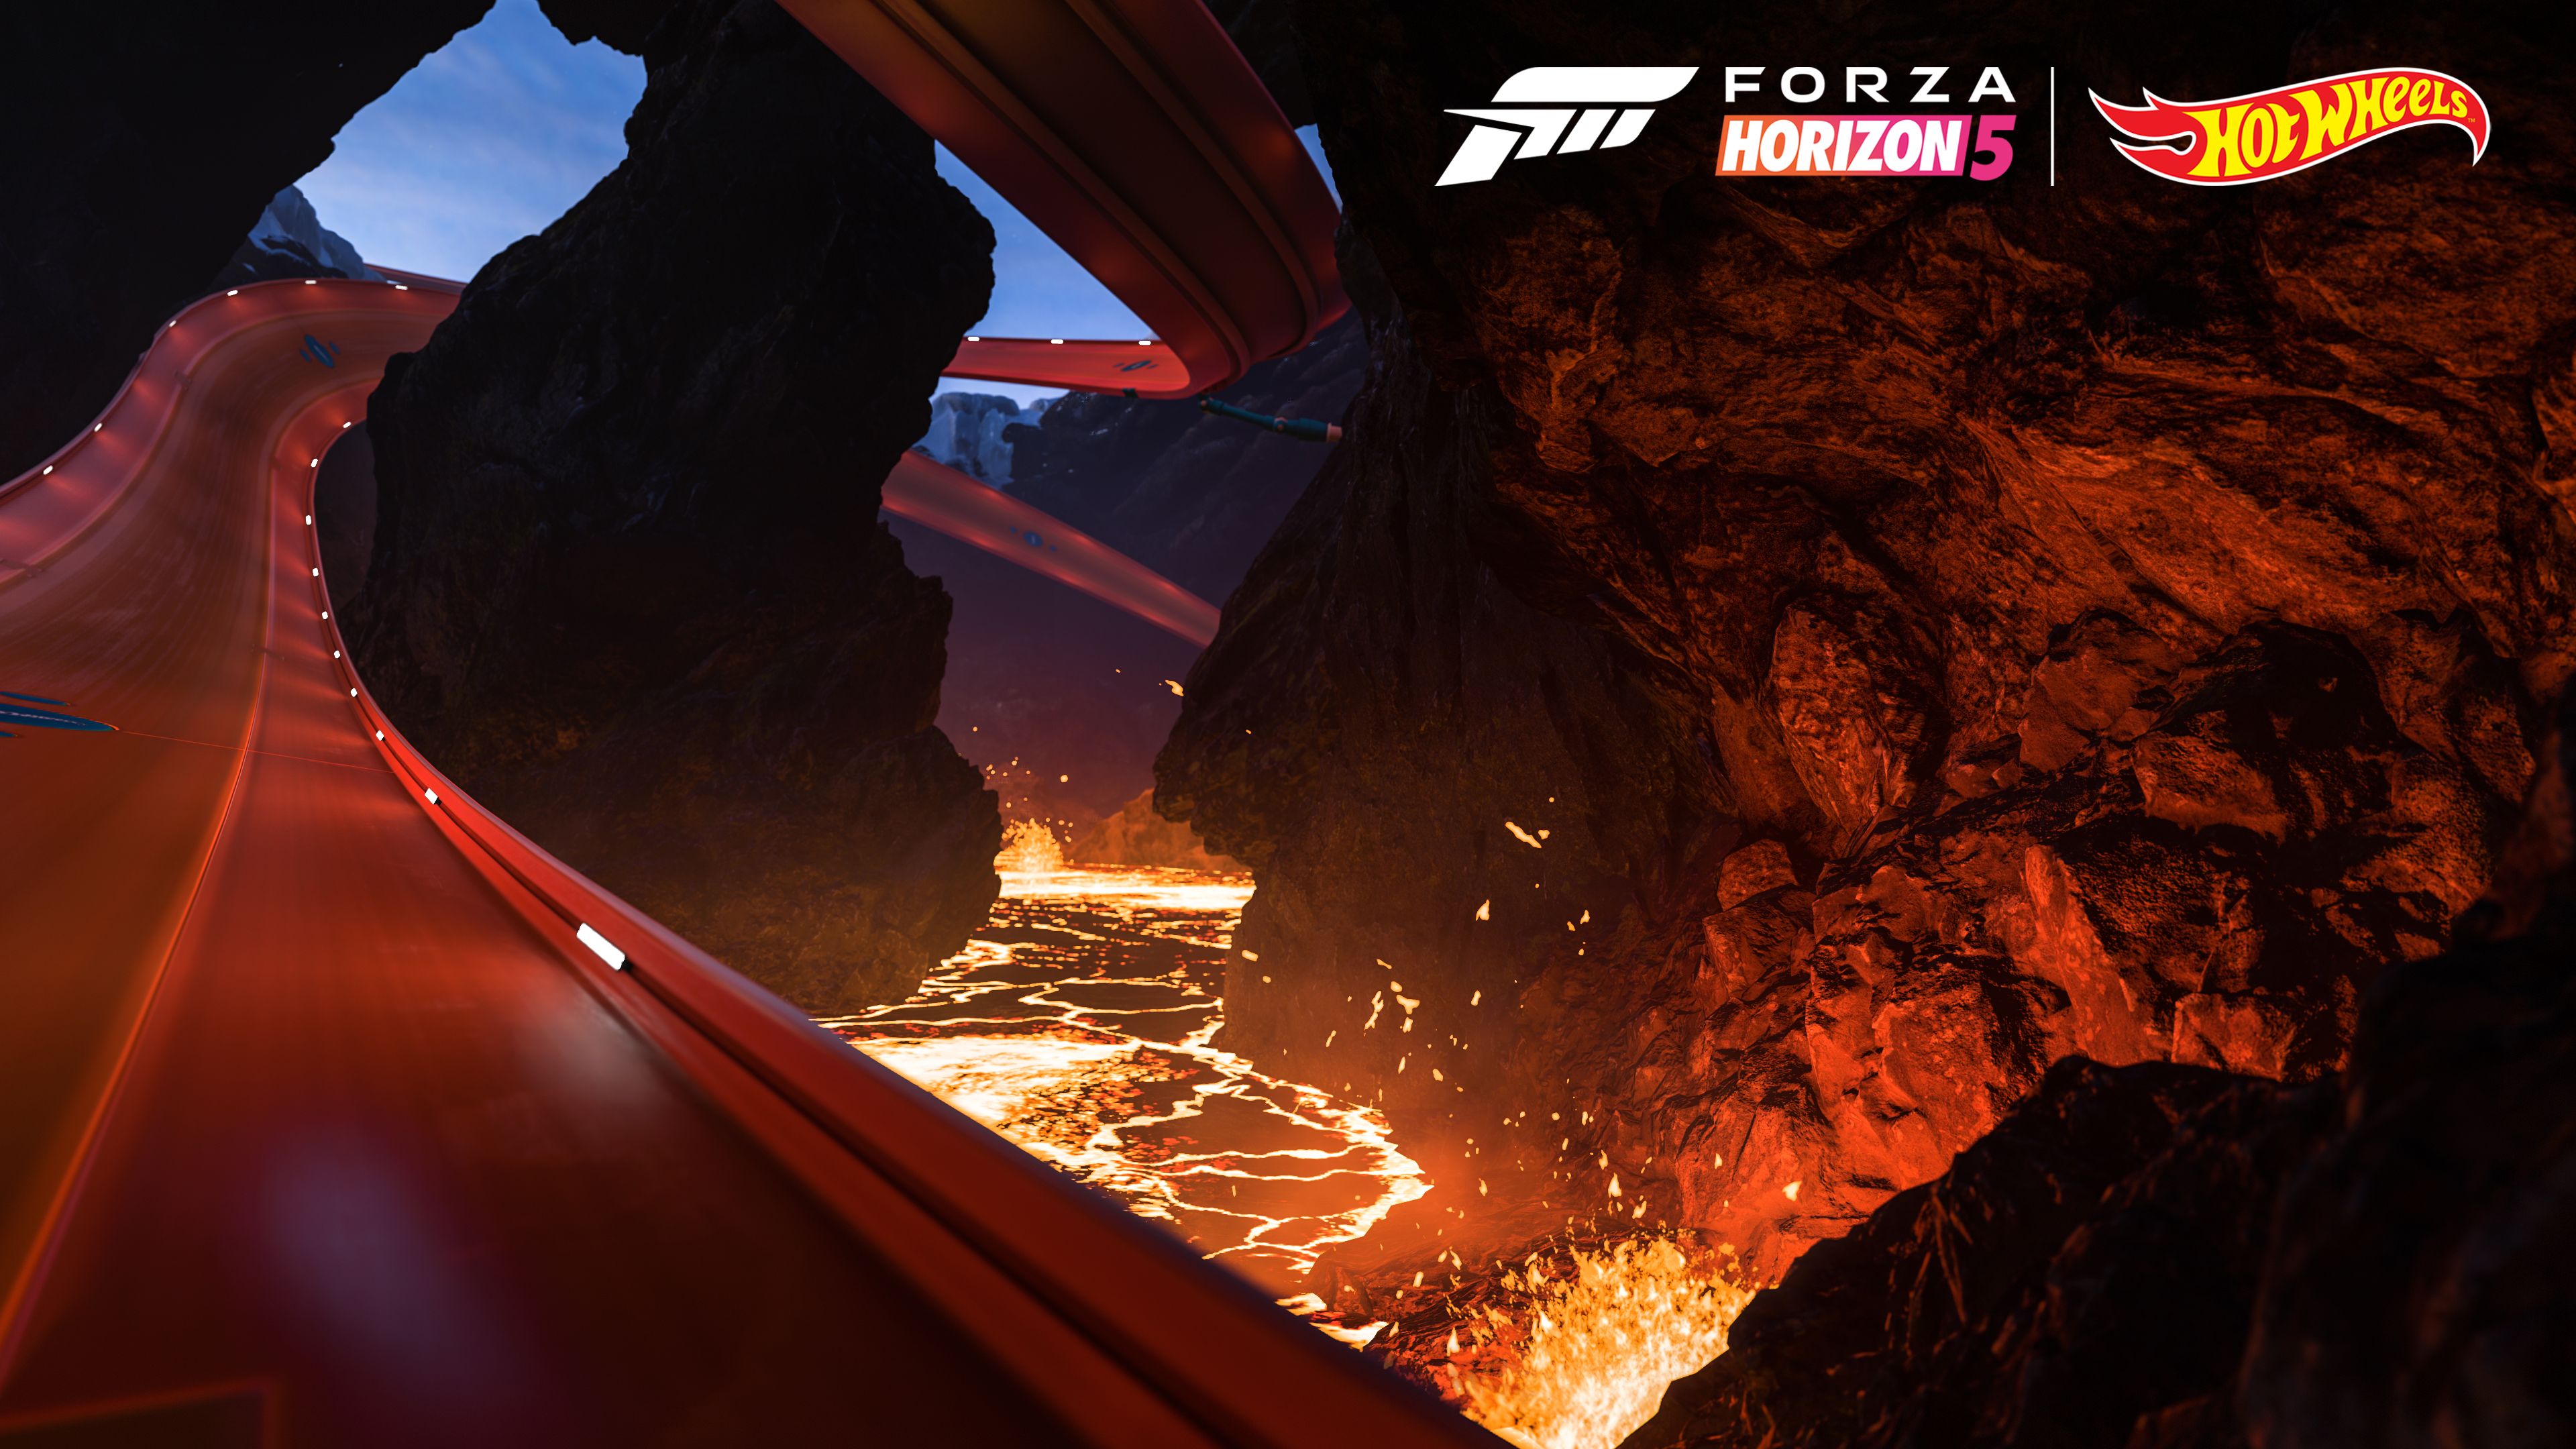 General 3840x2160 Forza Horizon 5 Hot Wheels video games watermarked race tracks CGI logo